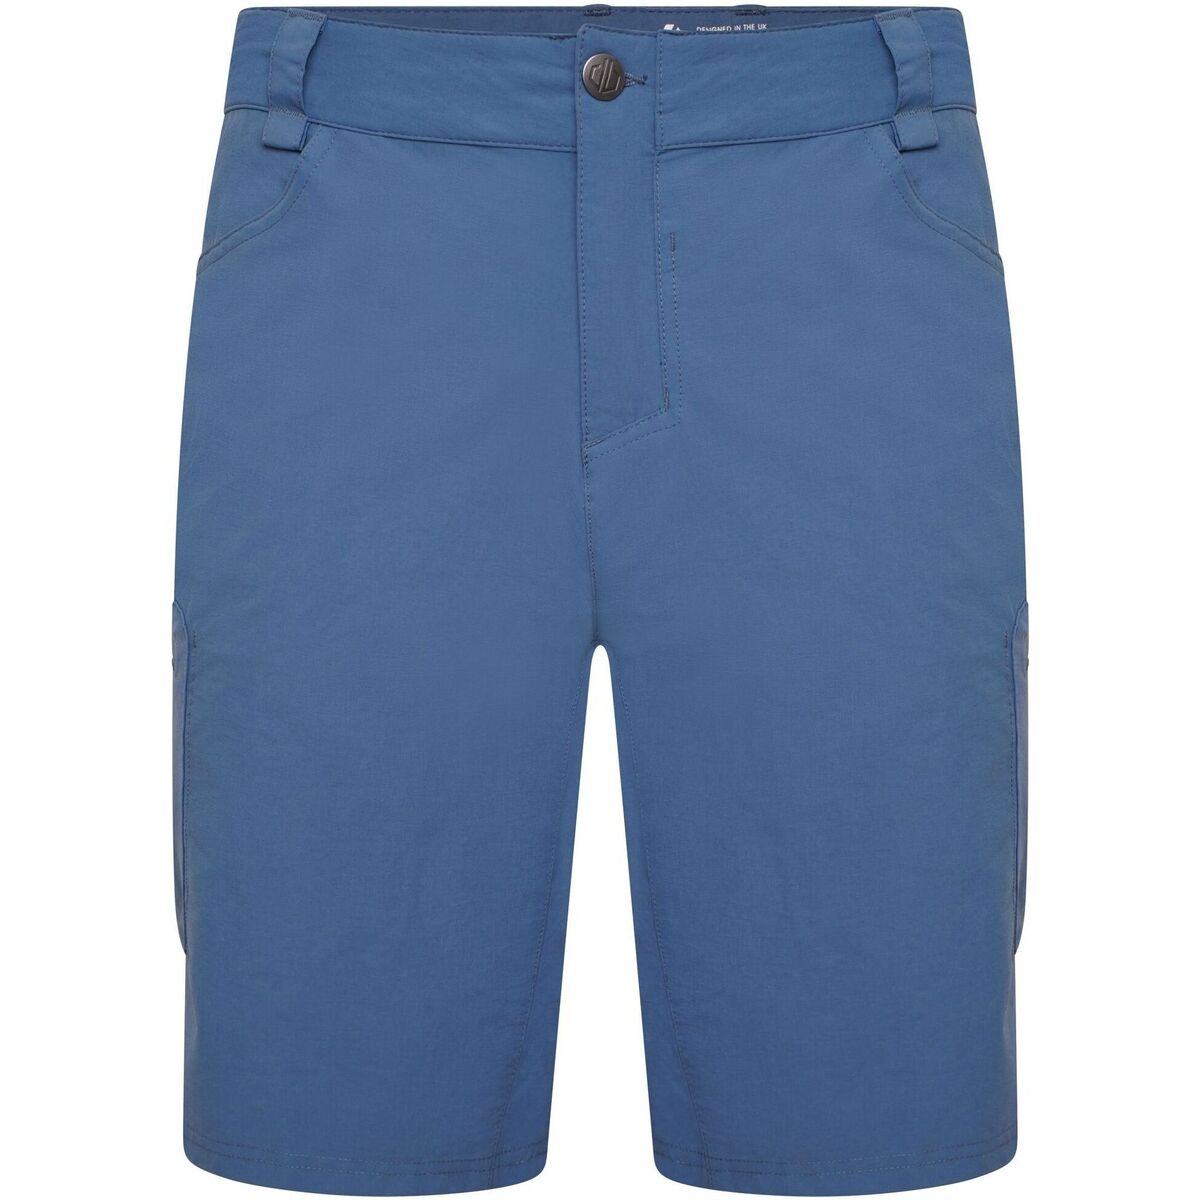 Vêtements Homme Shorts / Bermudas Dare 2b Tuned In II Bleu